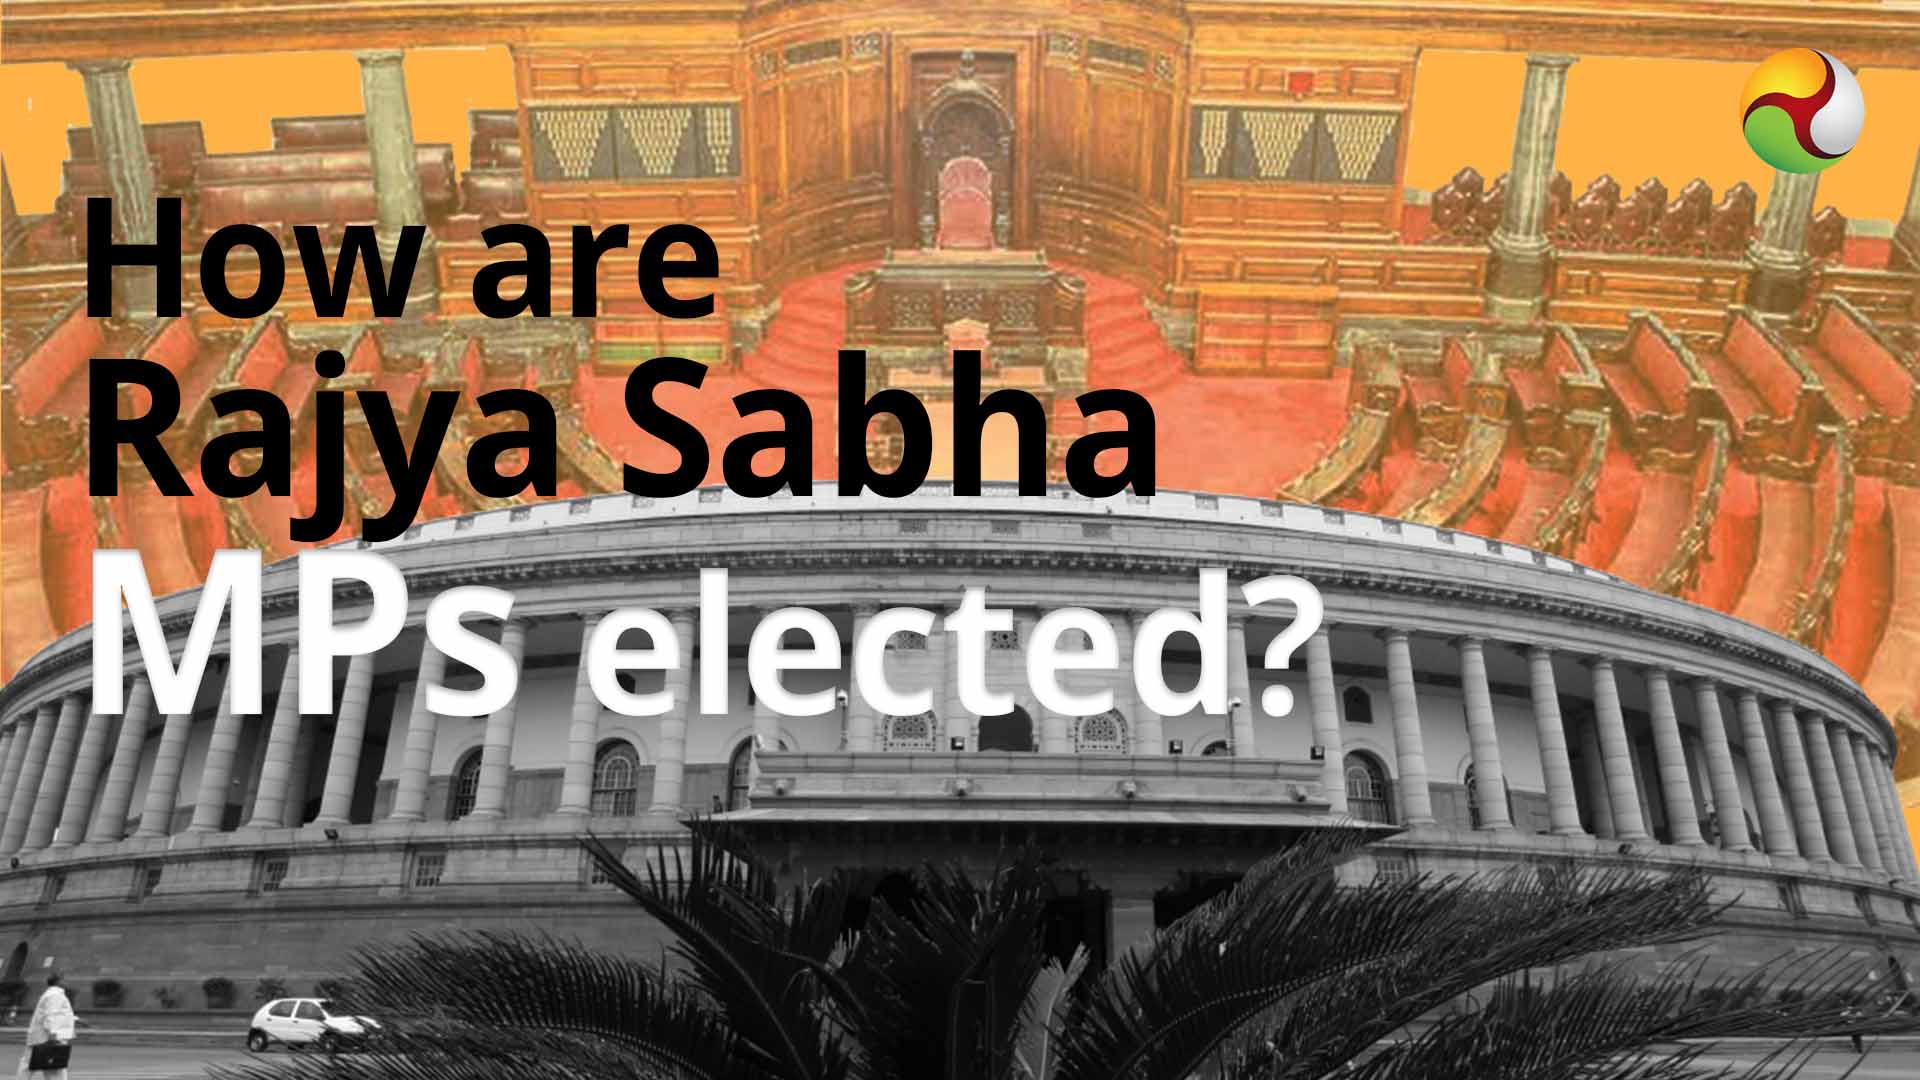 Rajya Sabha elections, The Federal, english news website